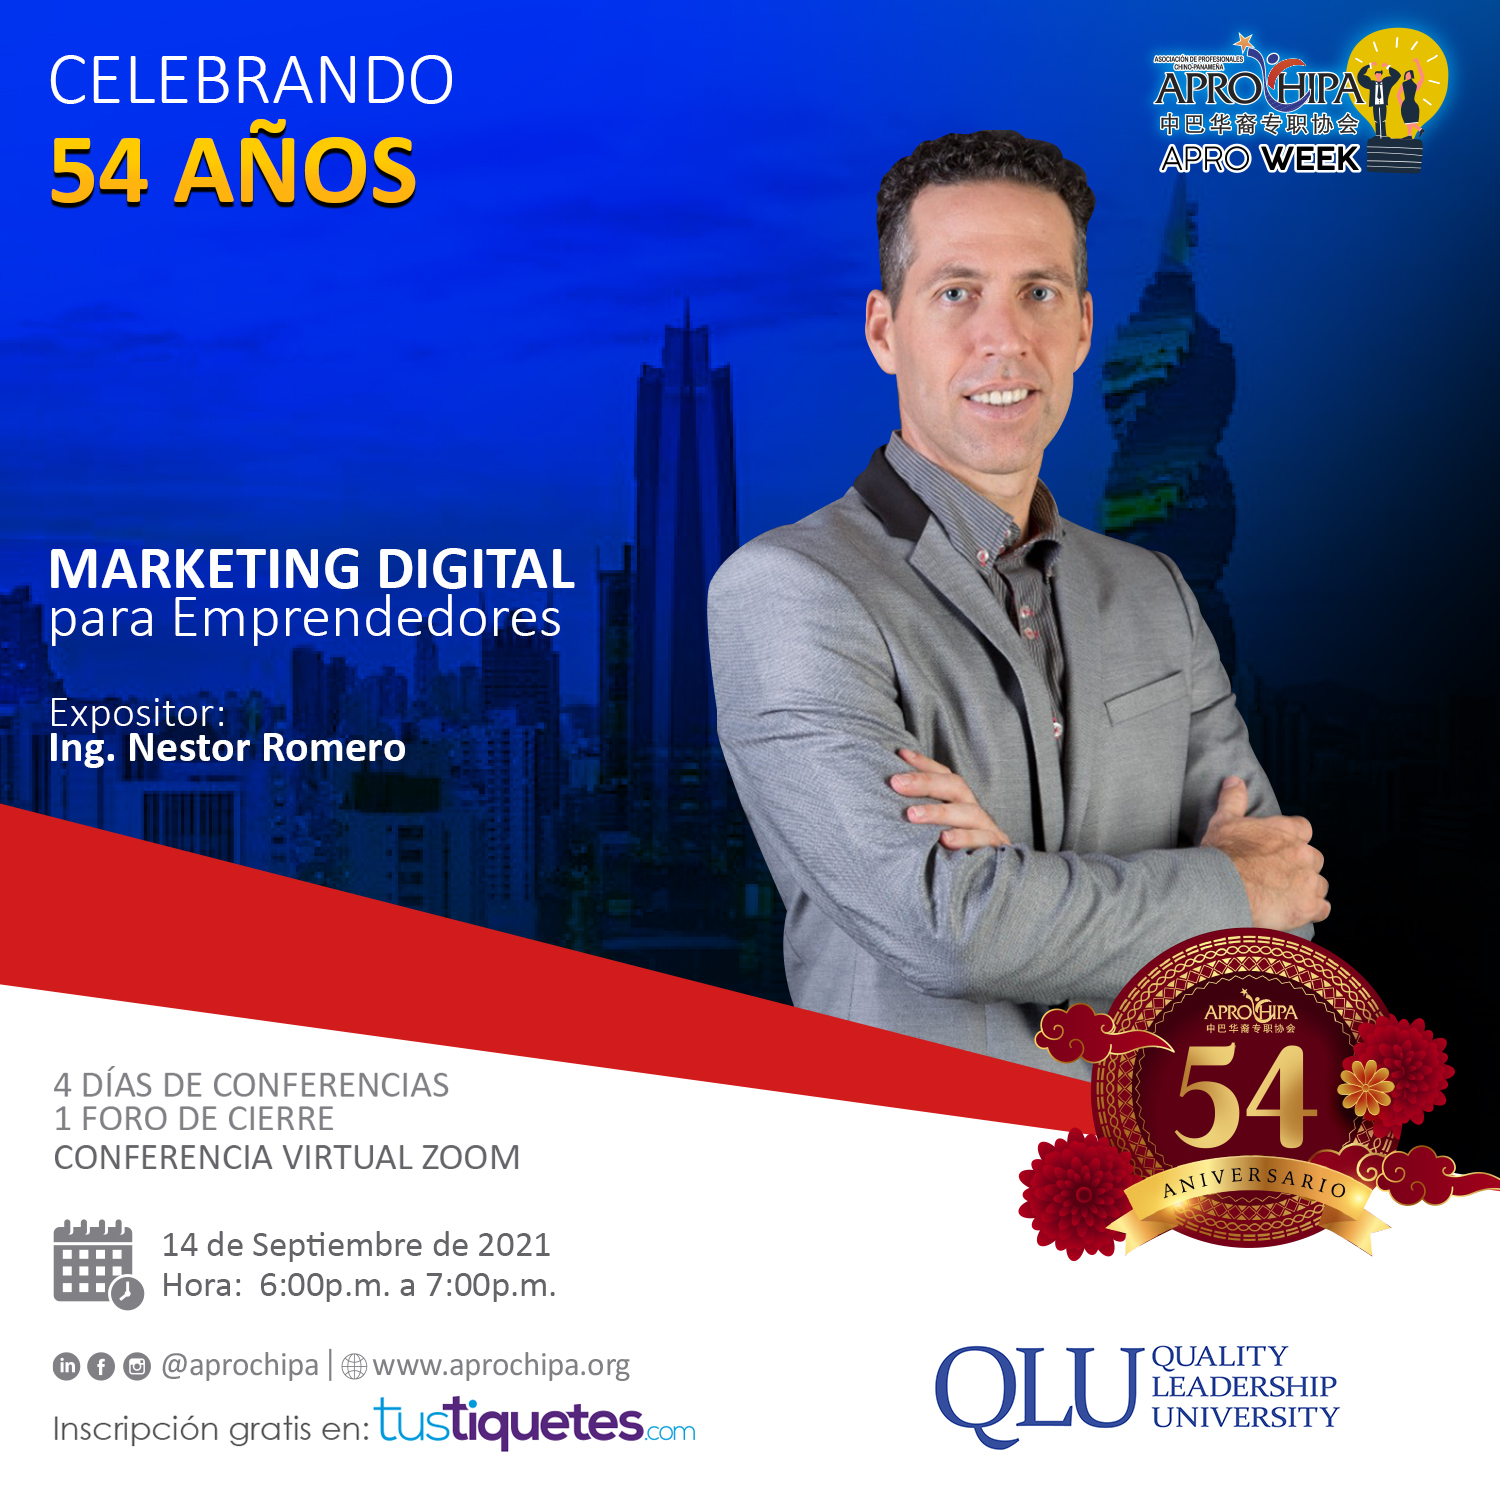 Nestor Romero marketing digital para emprendedores Panama